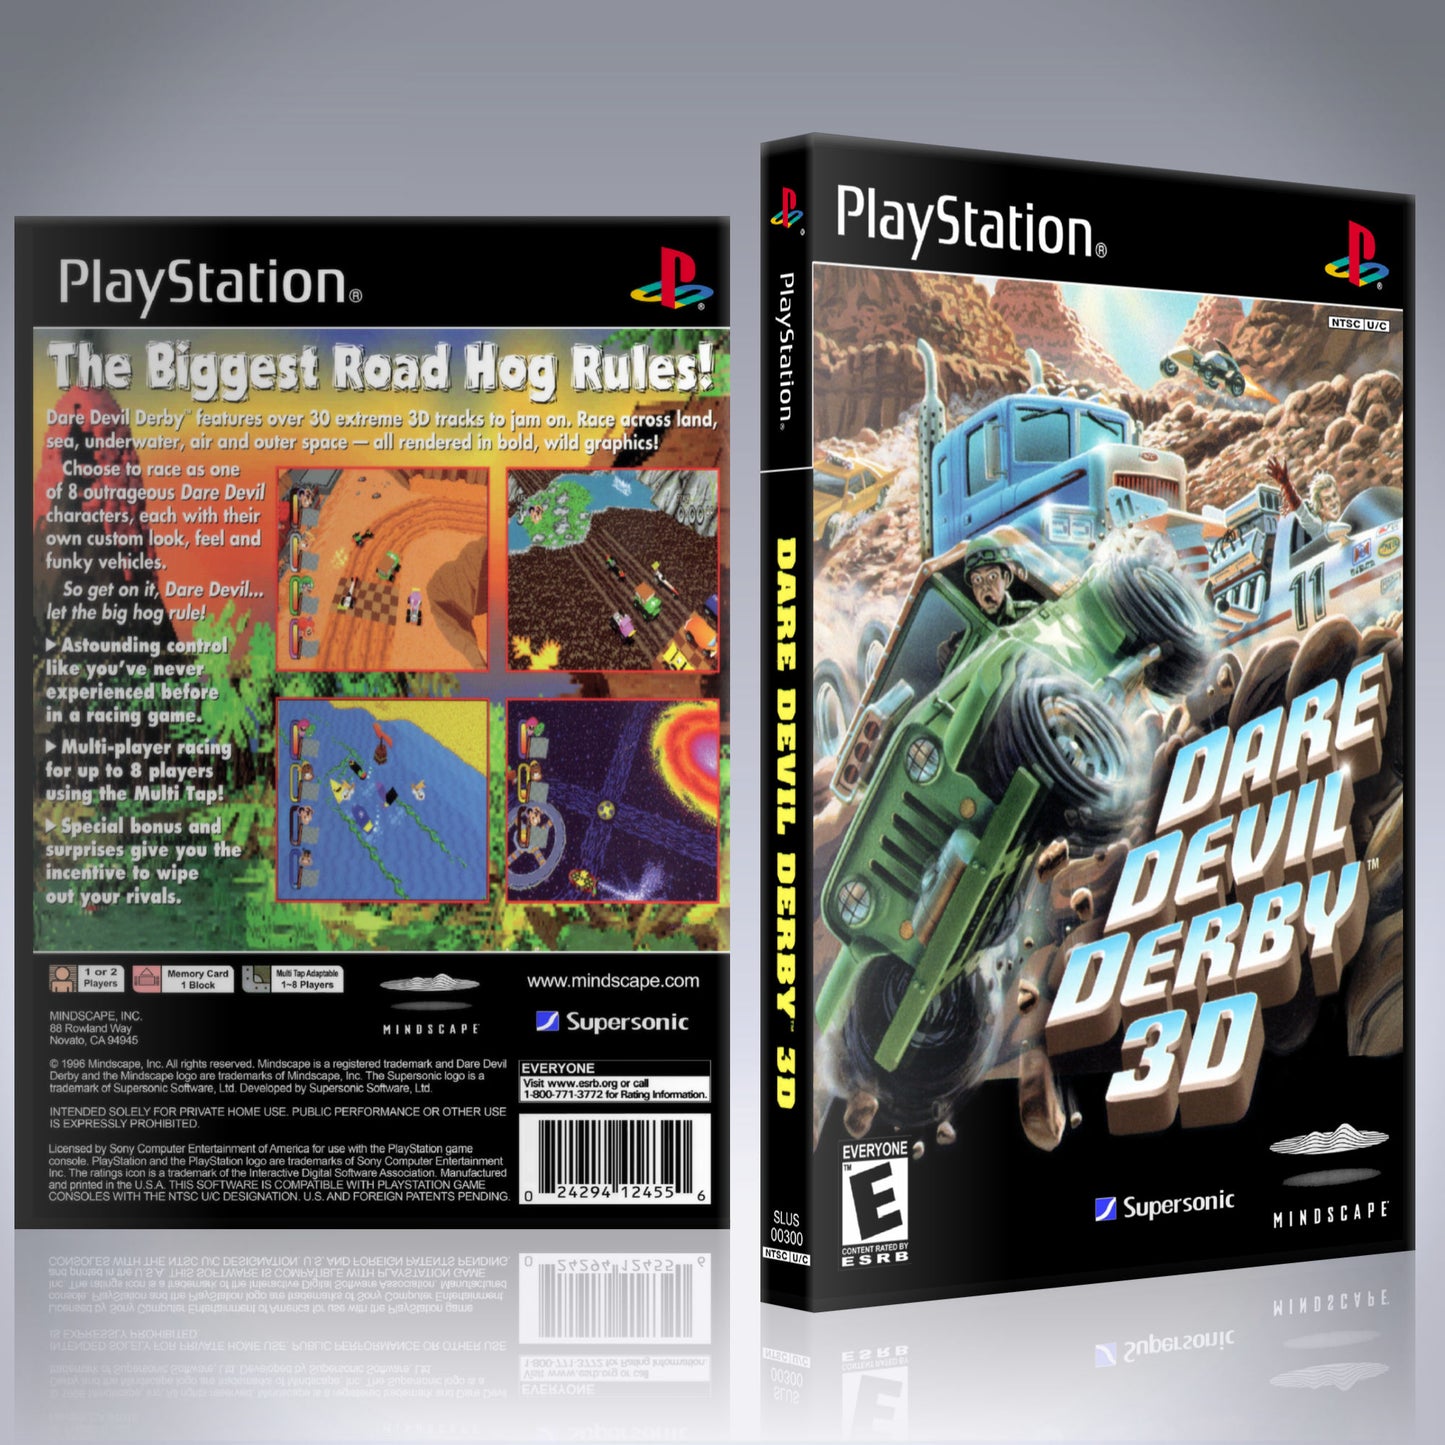 PS1 Case - NO GAME - Dare Devil Derby 3D